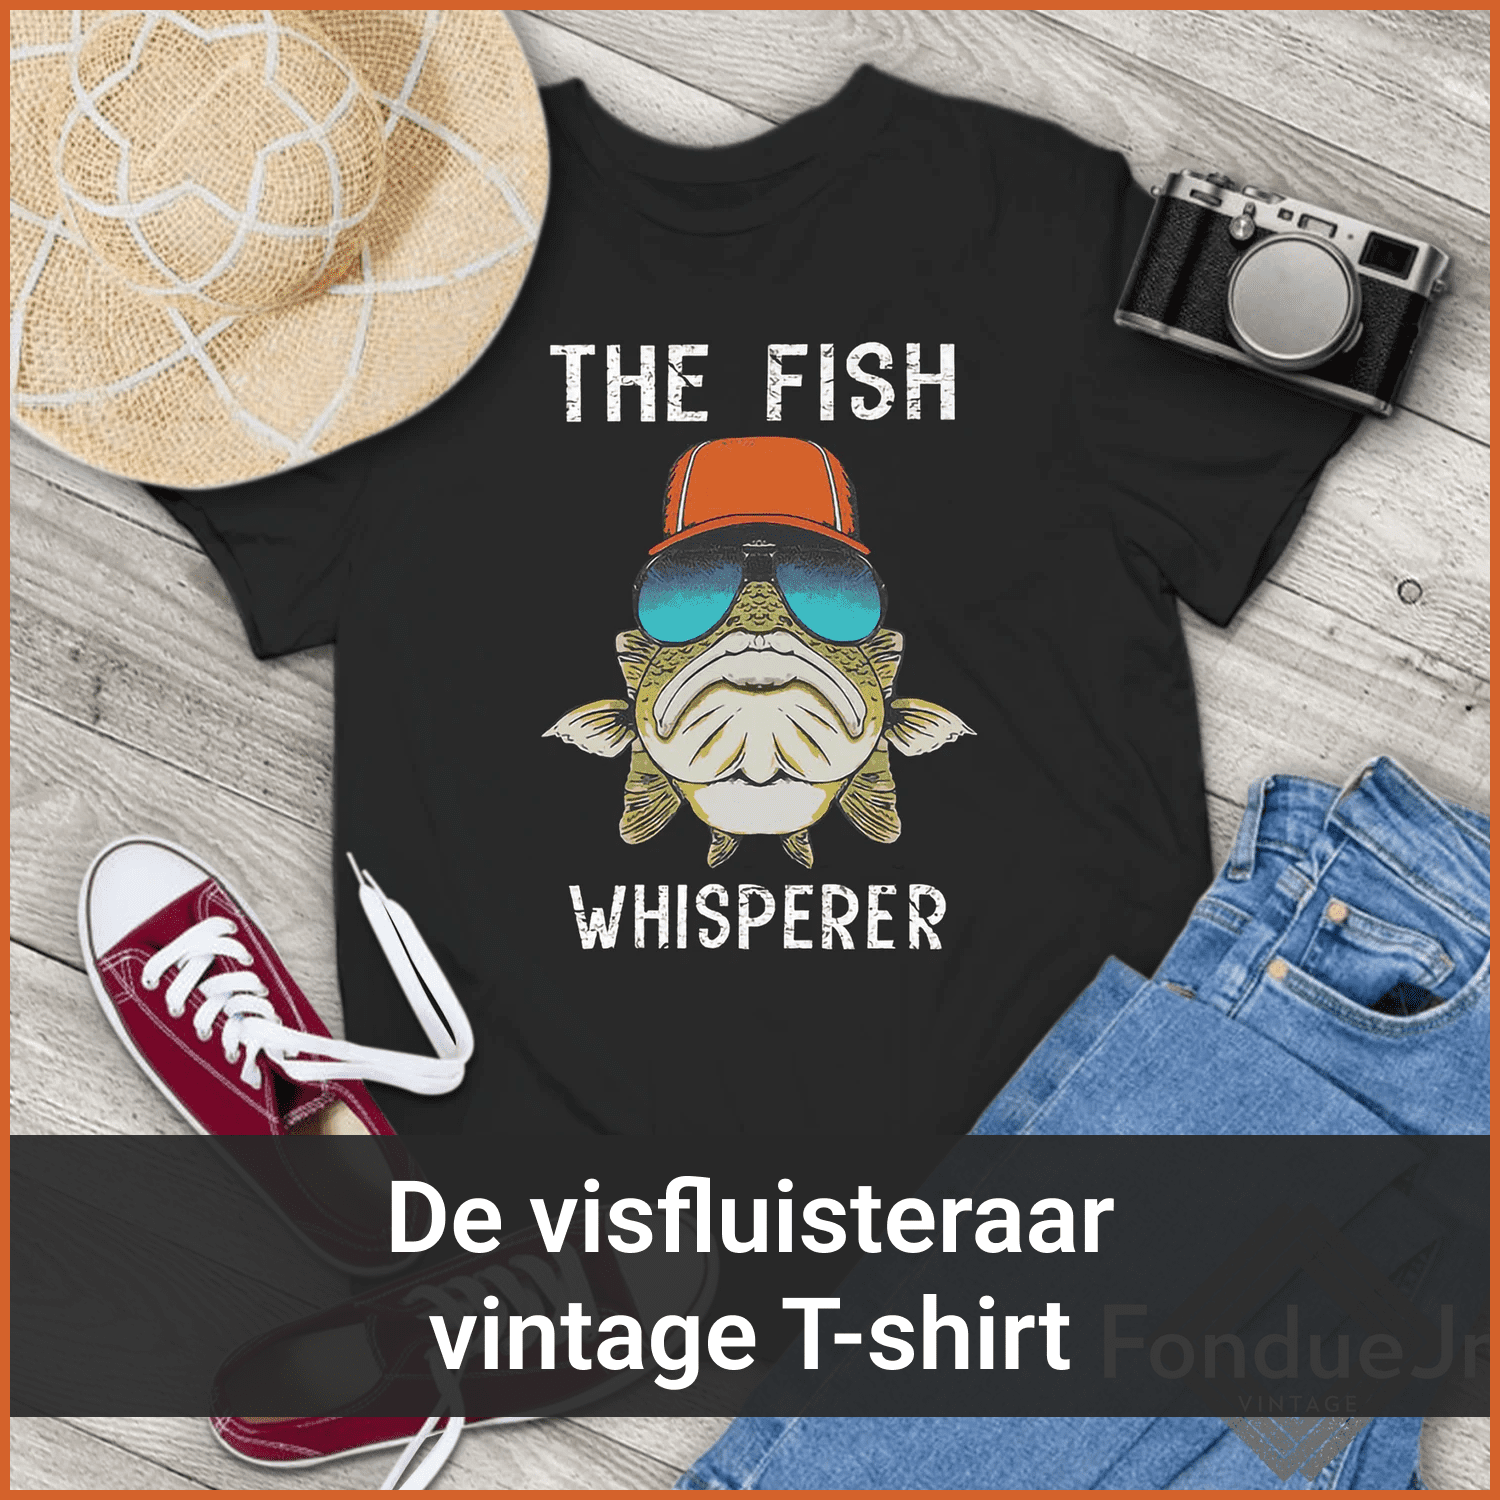 https://masterbundles.com/wp-content/uploads/2022/08/1-de-visfluisteraar-vintage-t-shirt-vissers-shirt.png